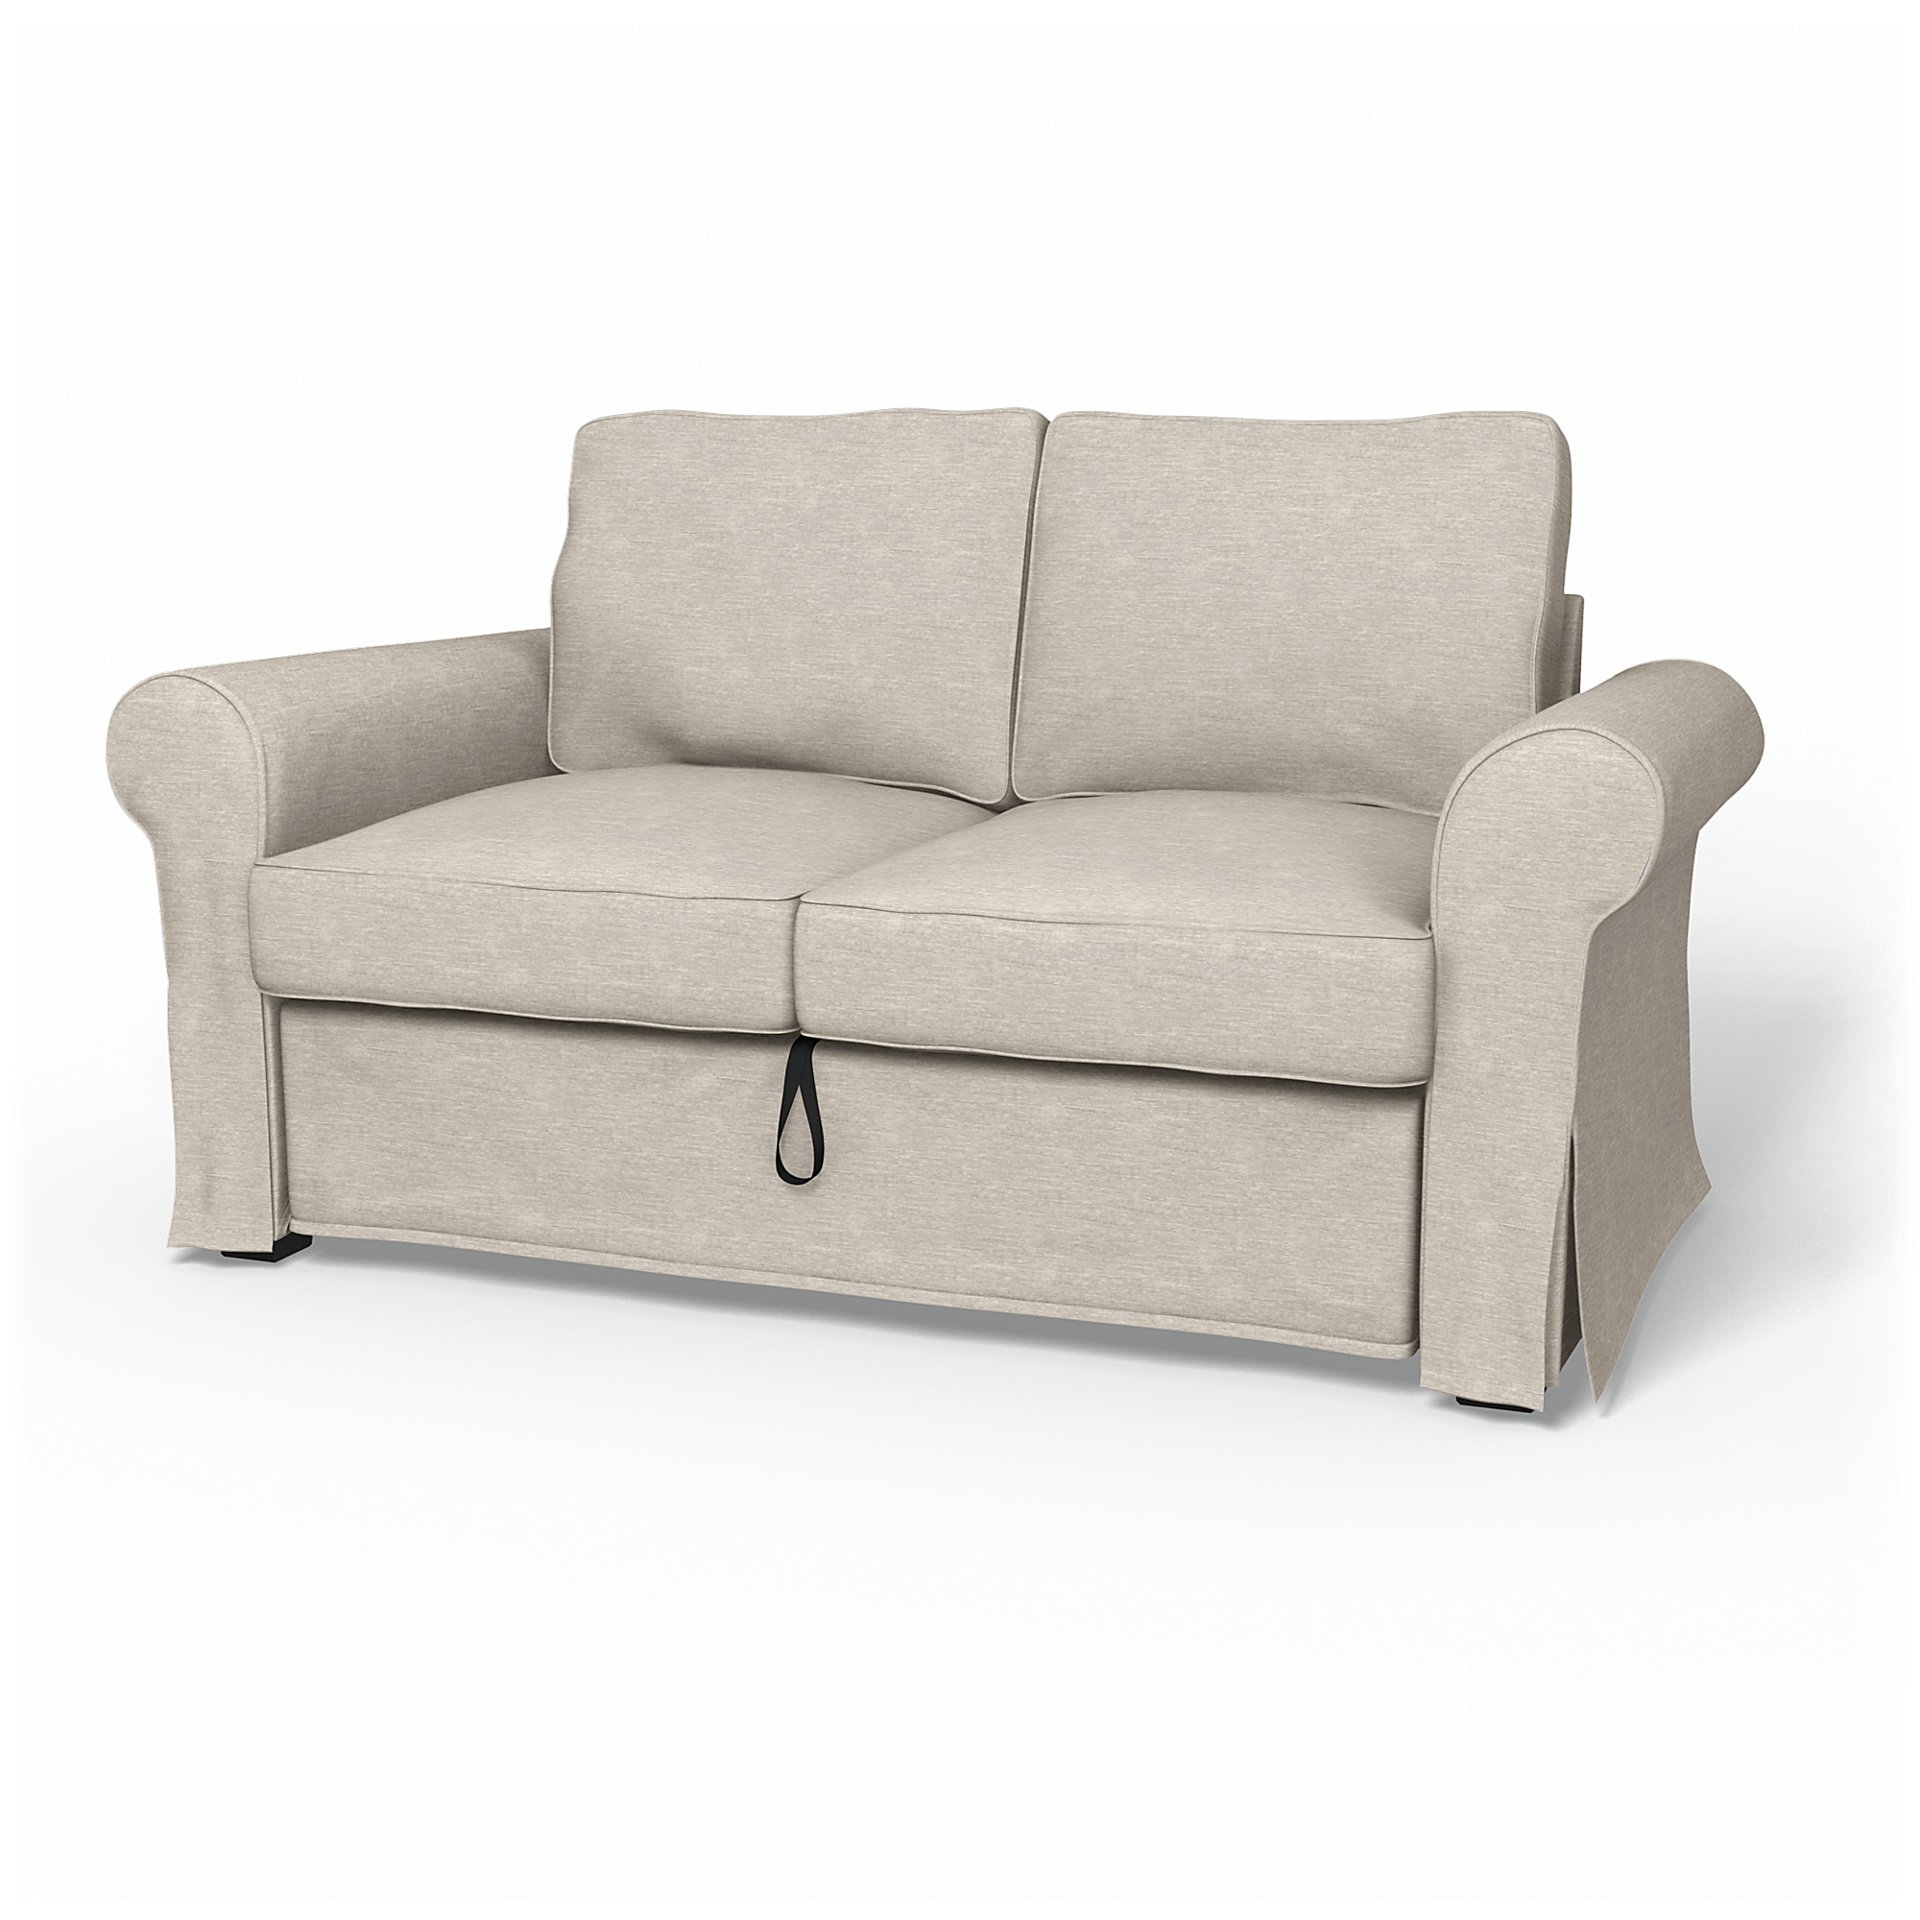 IKEA - Backabro 2 Seater Sofa Bed Cover, Natural White, Velvet - Bemz